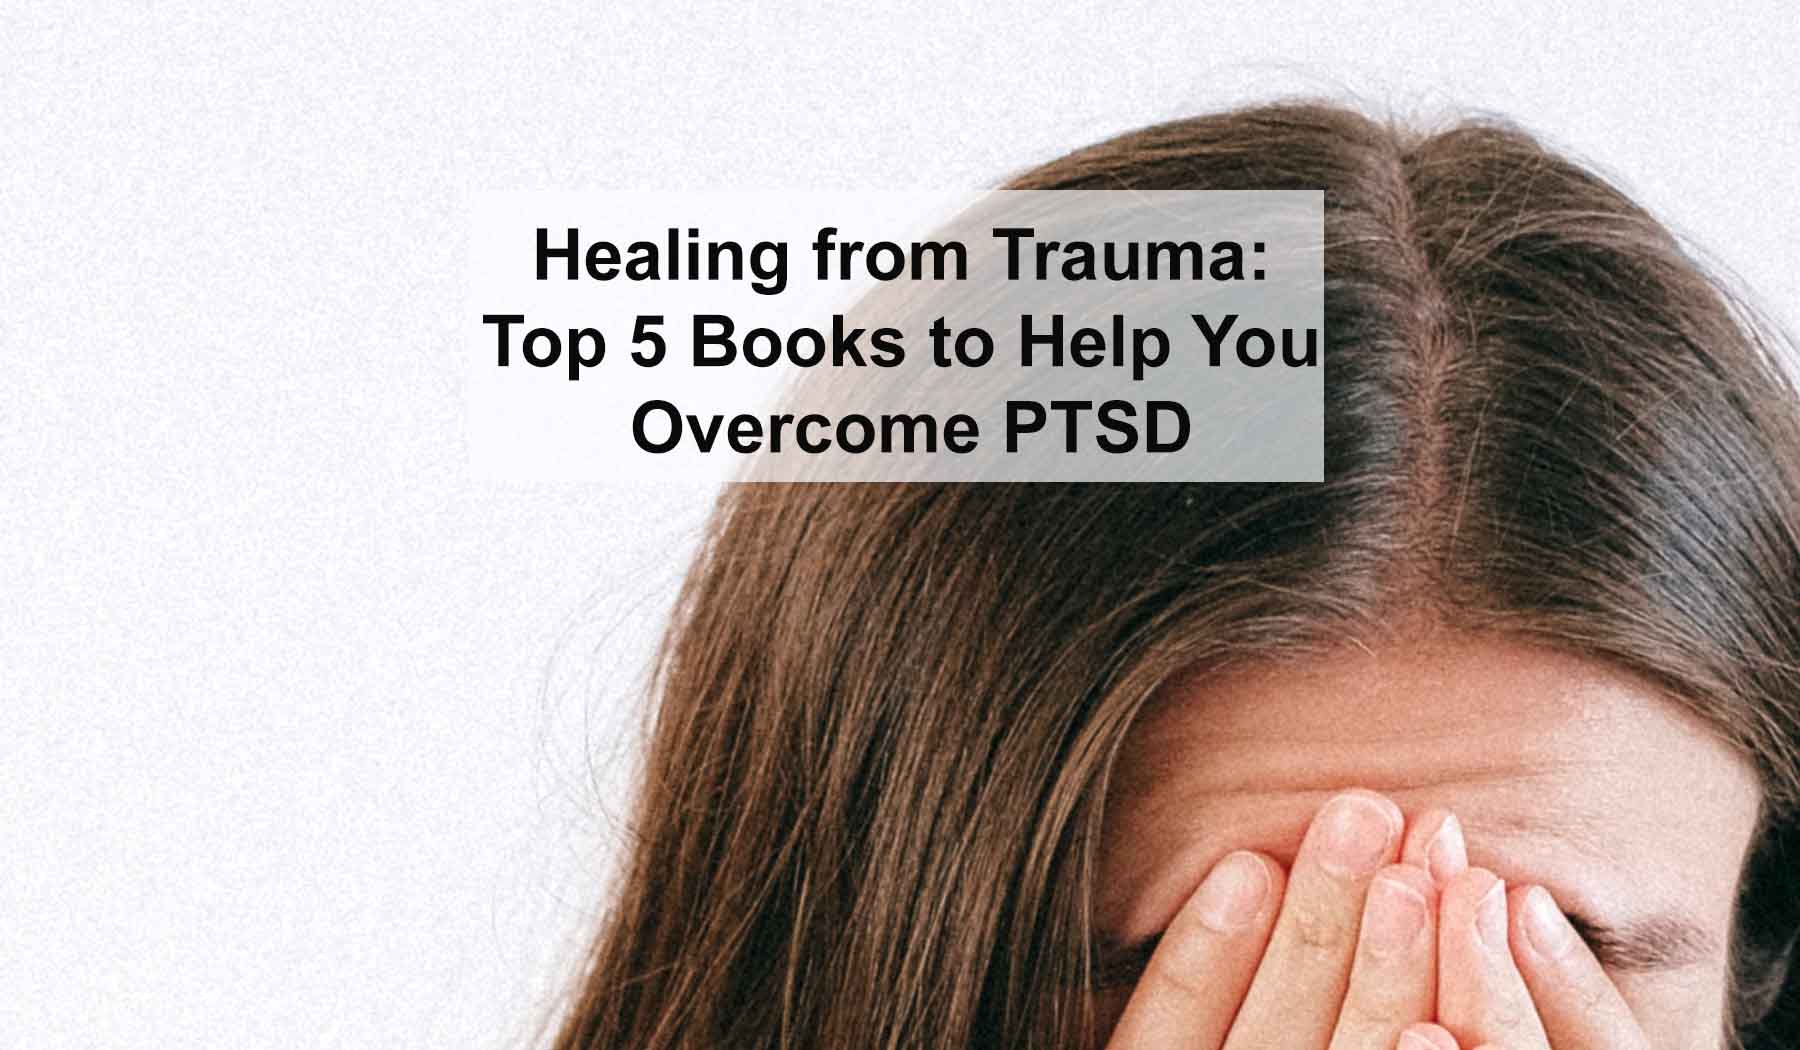 Healing from Trauma 5 books To Help with PTSD